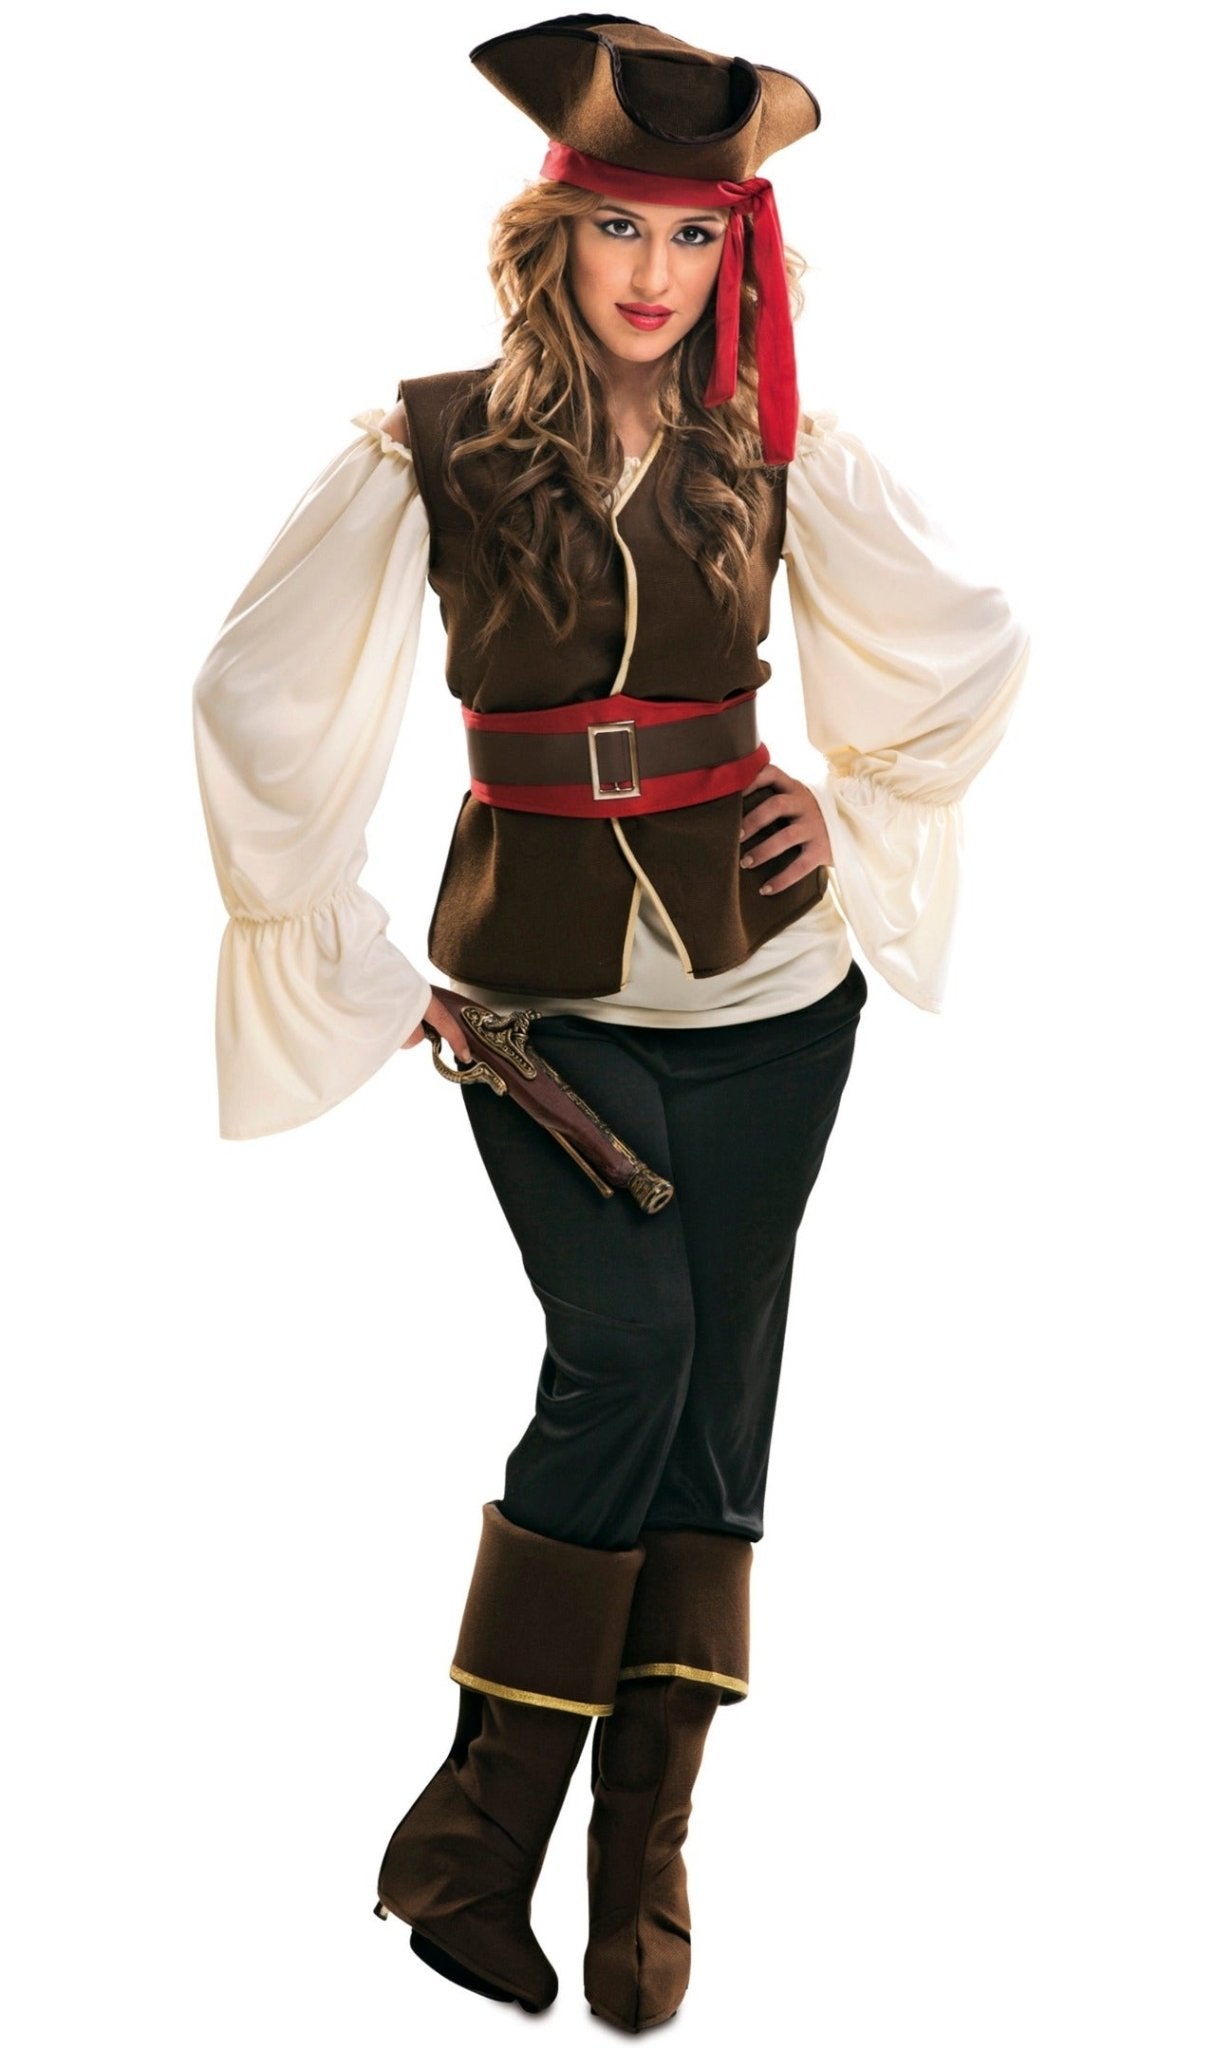 Disfraz de Pirata con sombrero para mujer